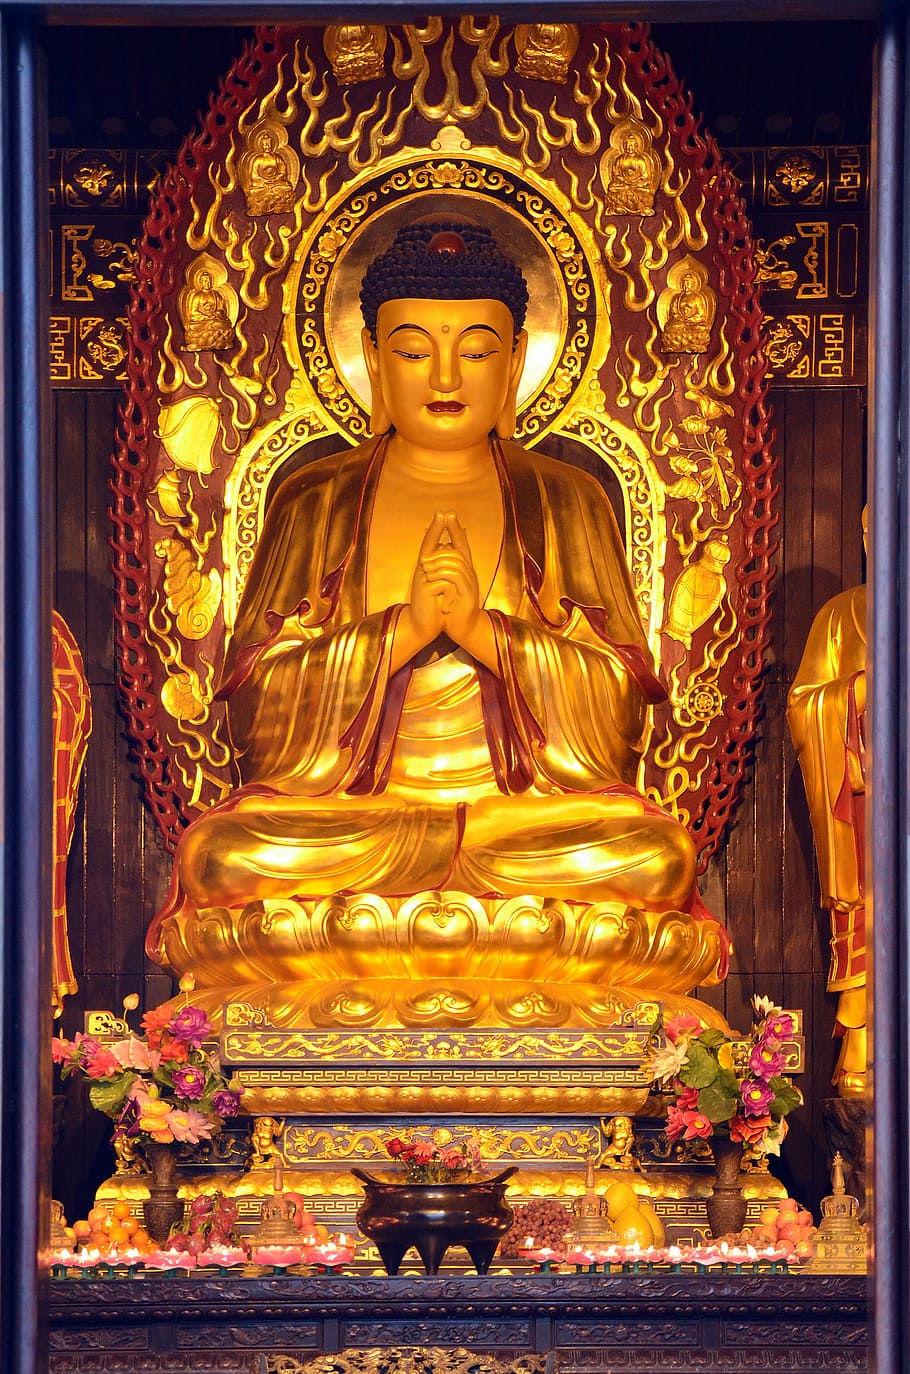 china, pekin, buddhism, buddha, religion, asia, statue, spirituality, temple - Building, thailand